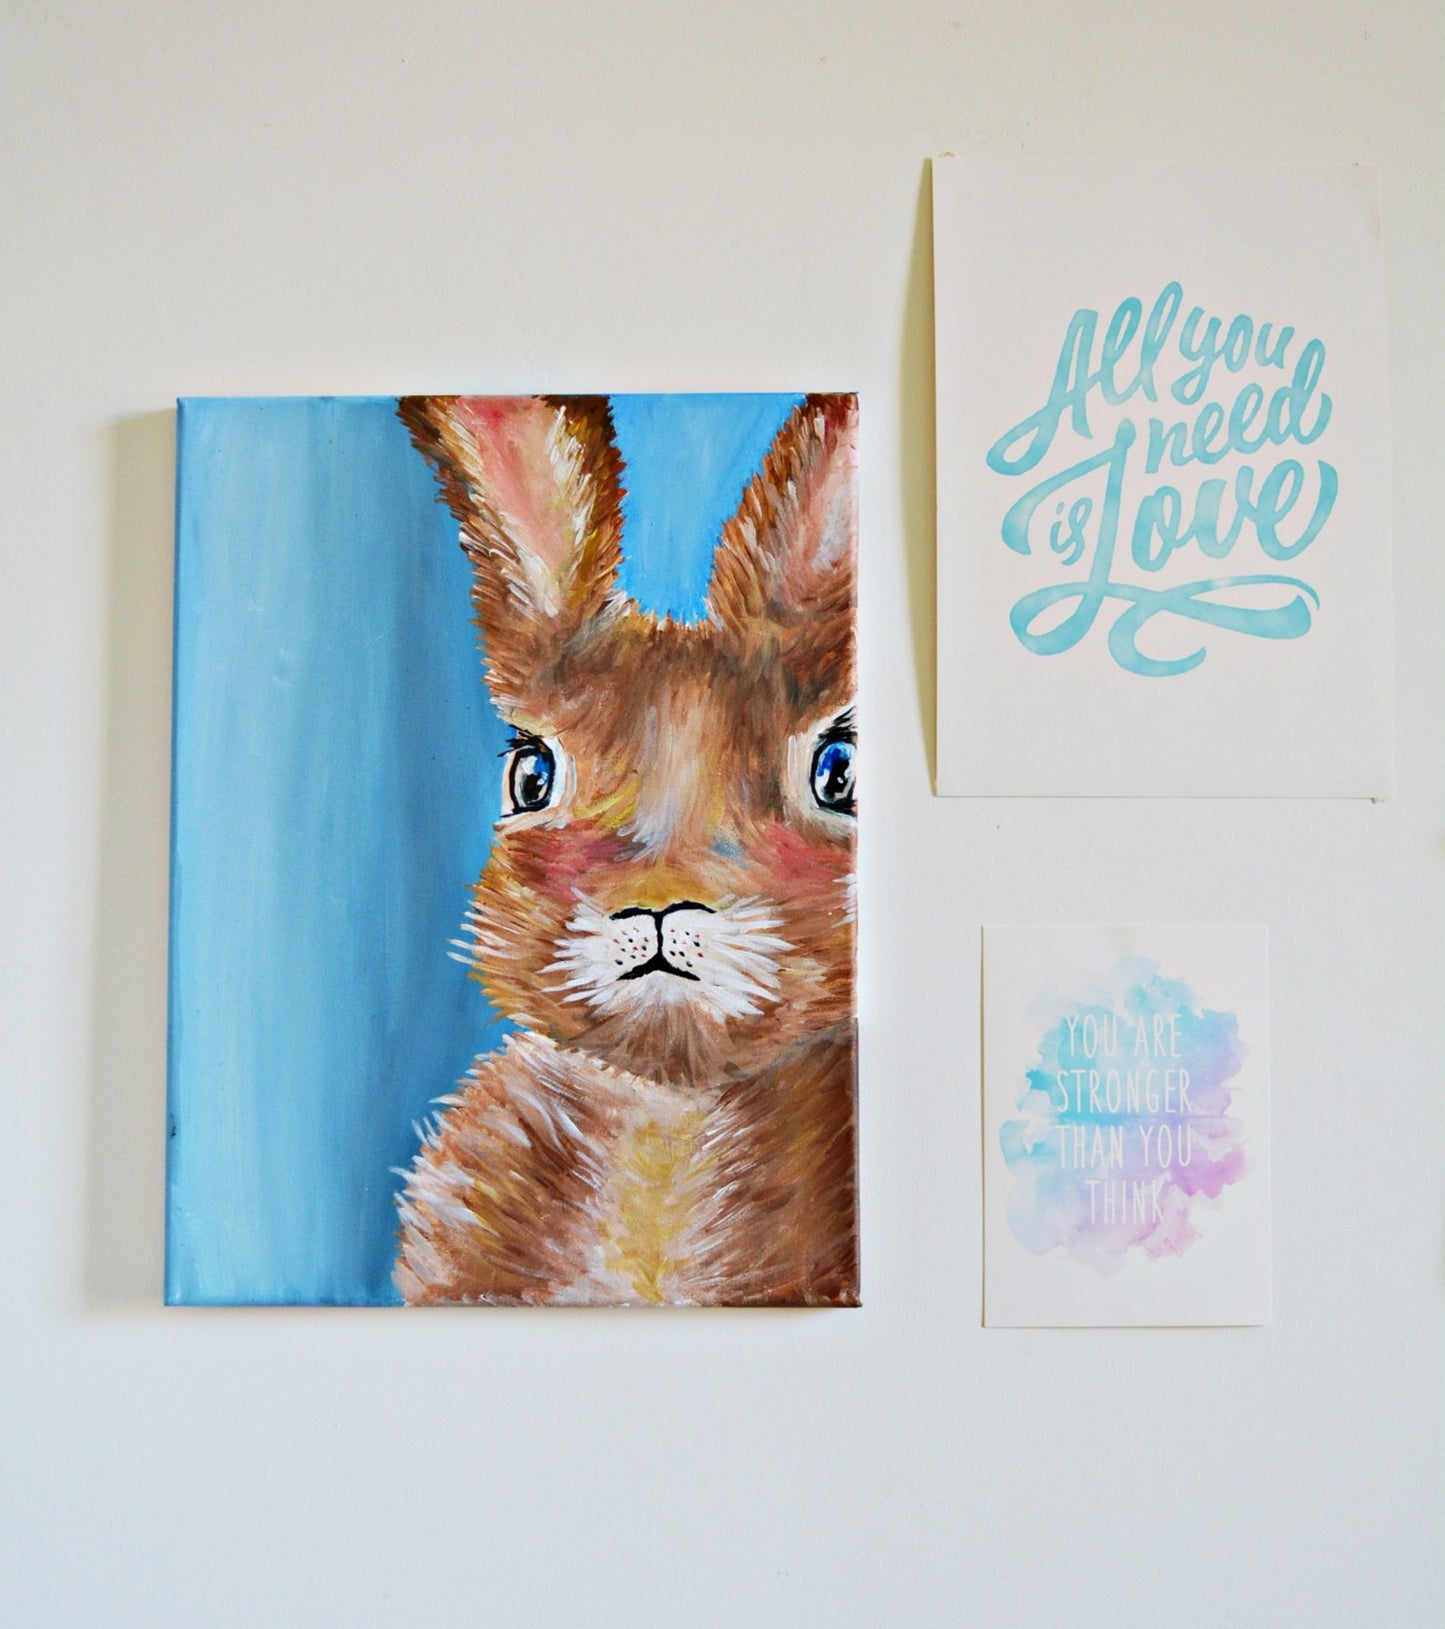 rabbit - Animal painting on canvas